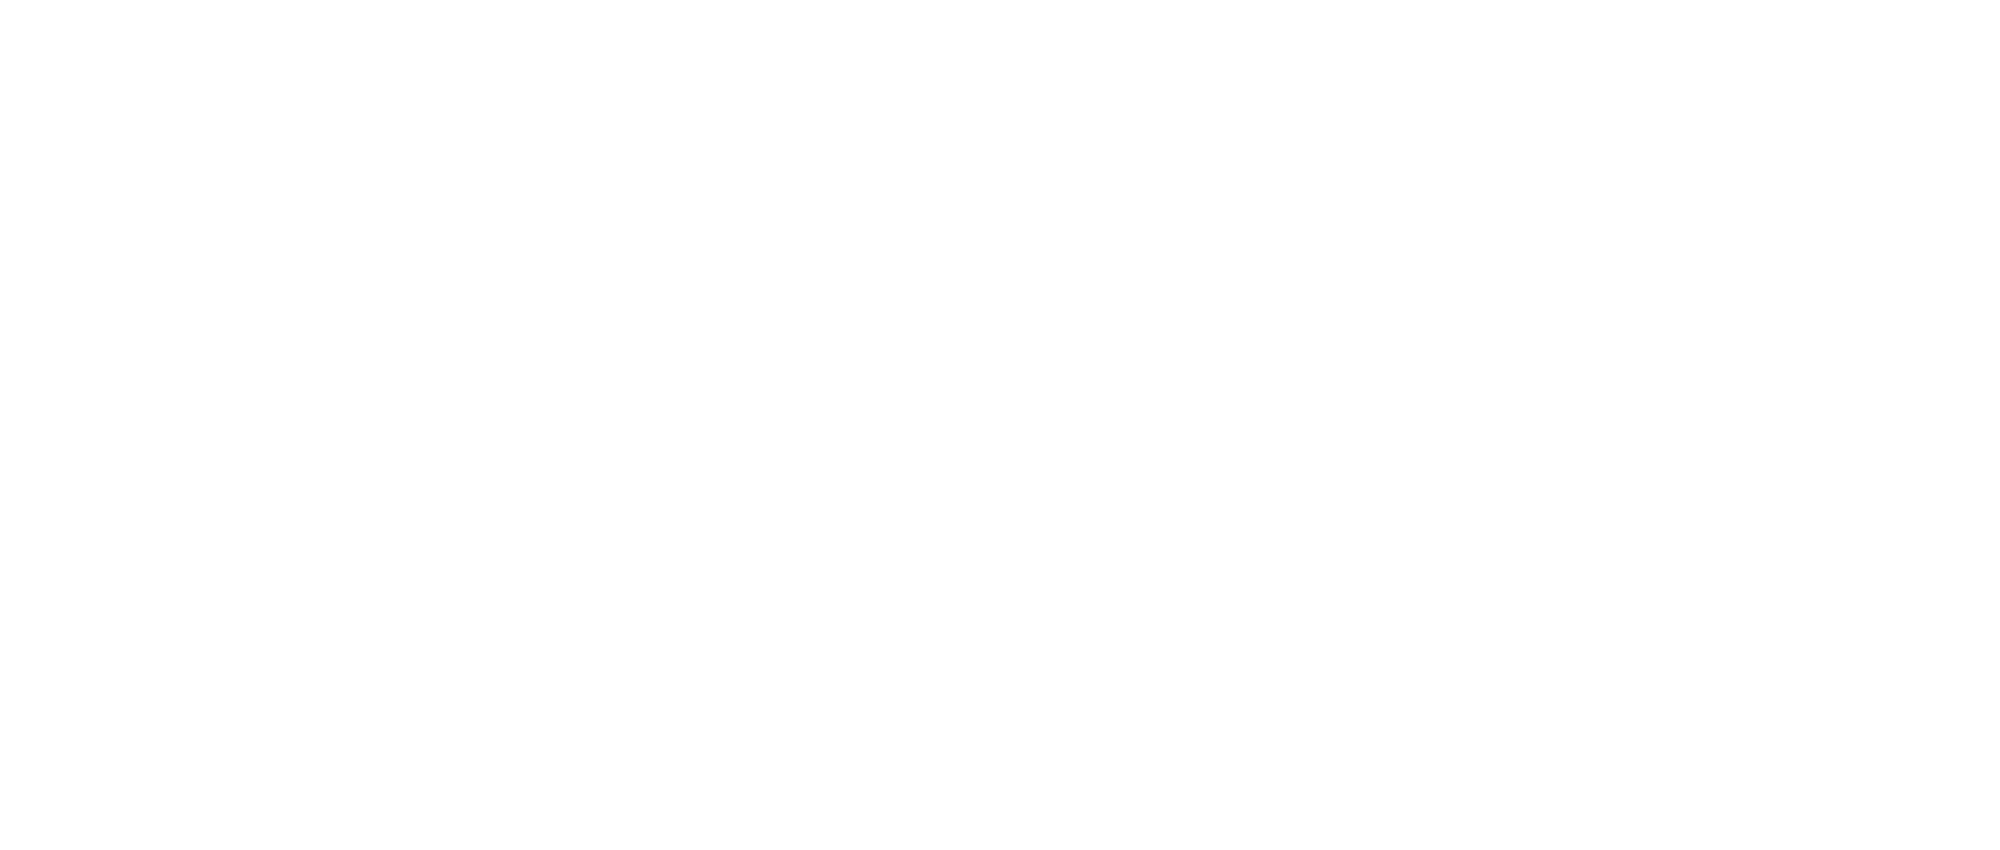 The Juke Joint Blues Mob